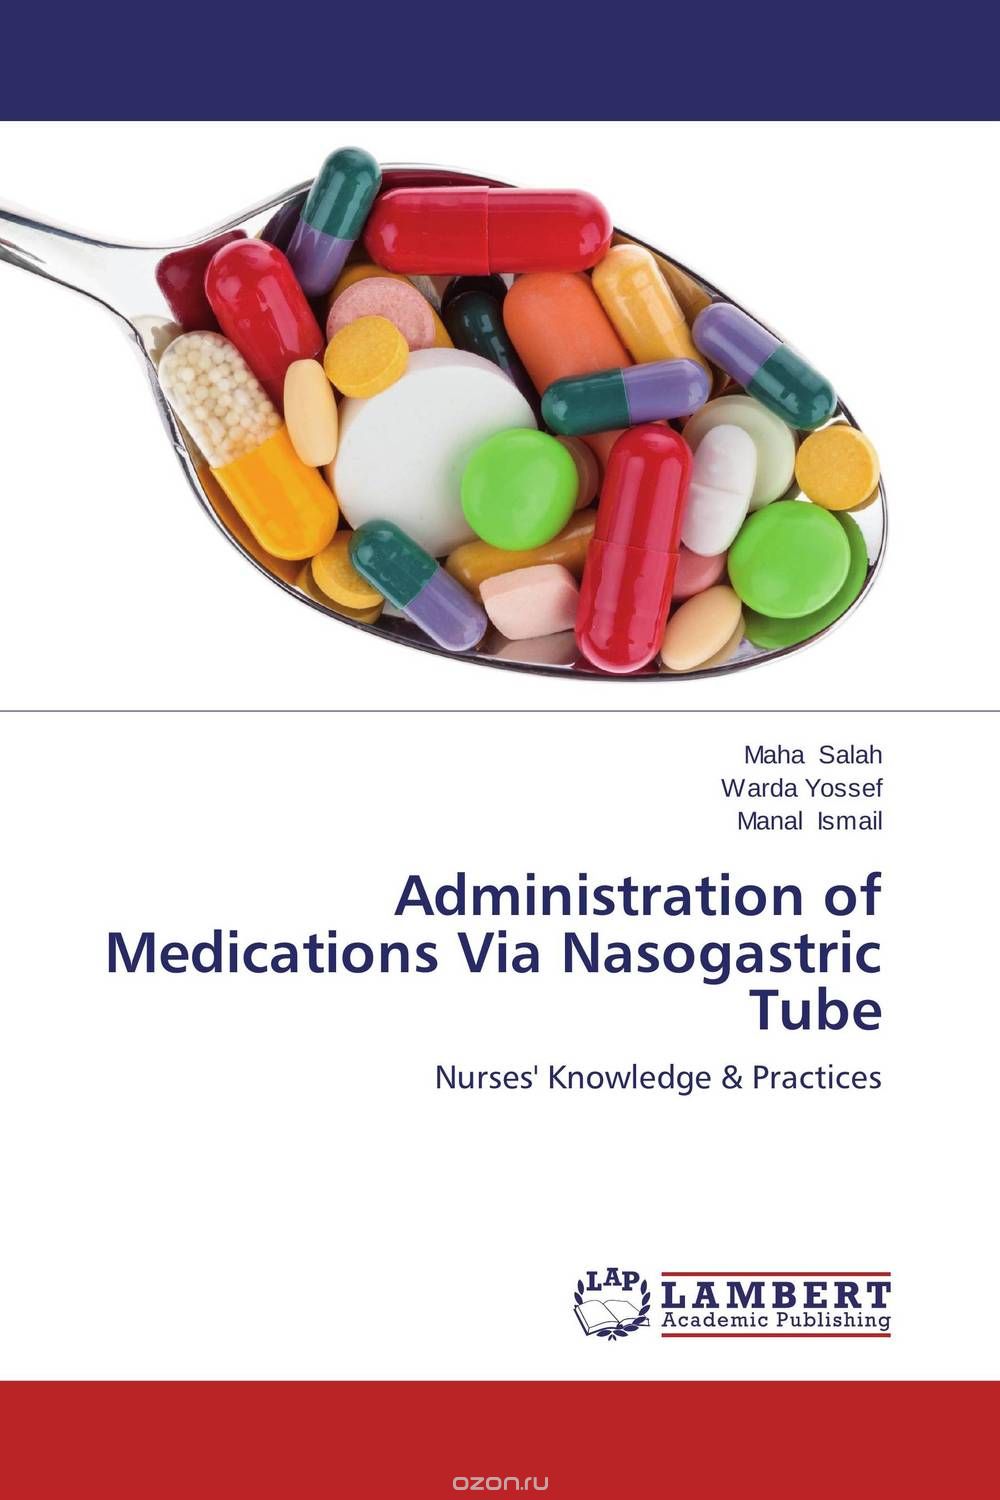 Скачать книгу "Administration of Medications Via Nasogastric Tube"